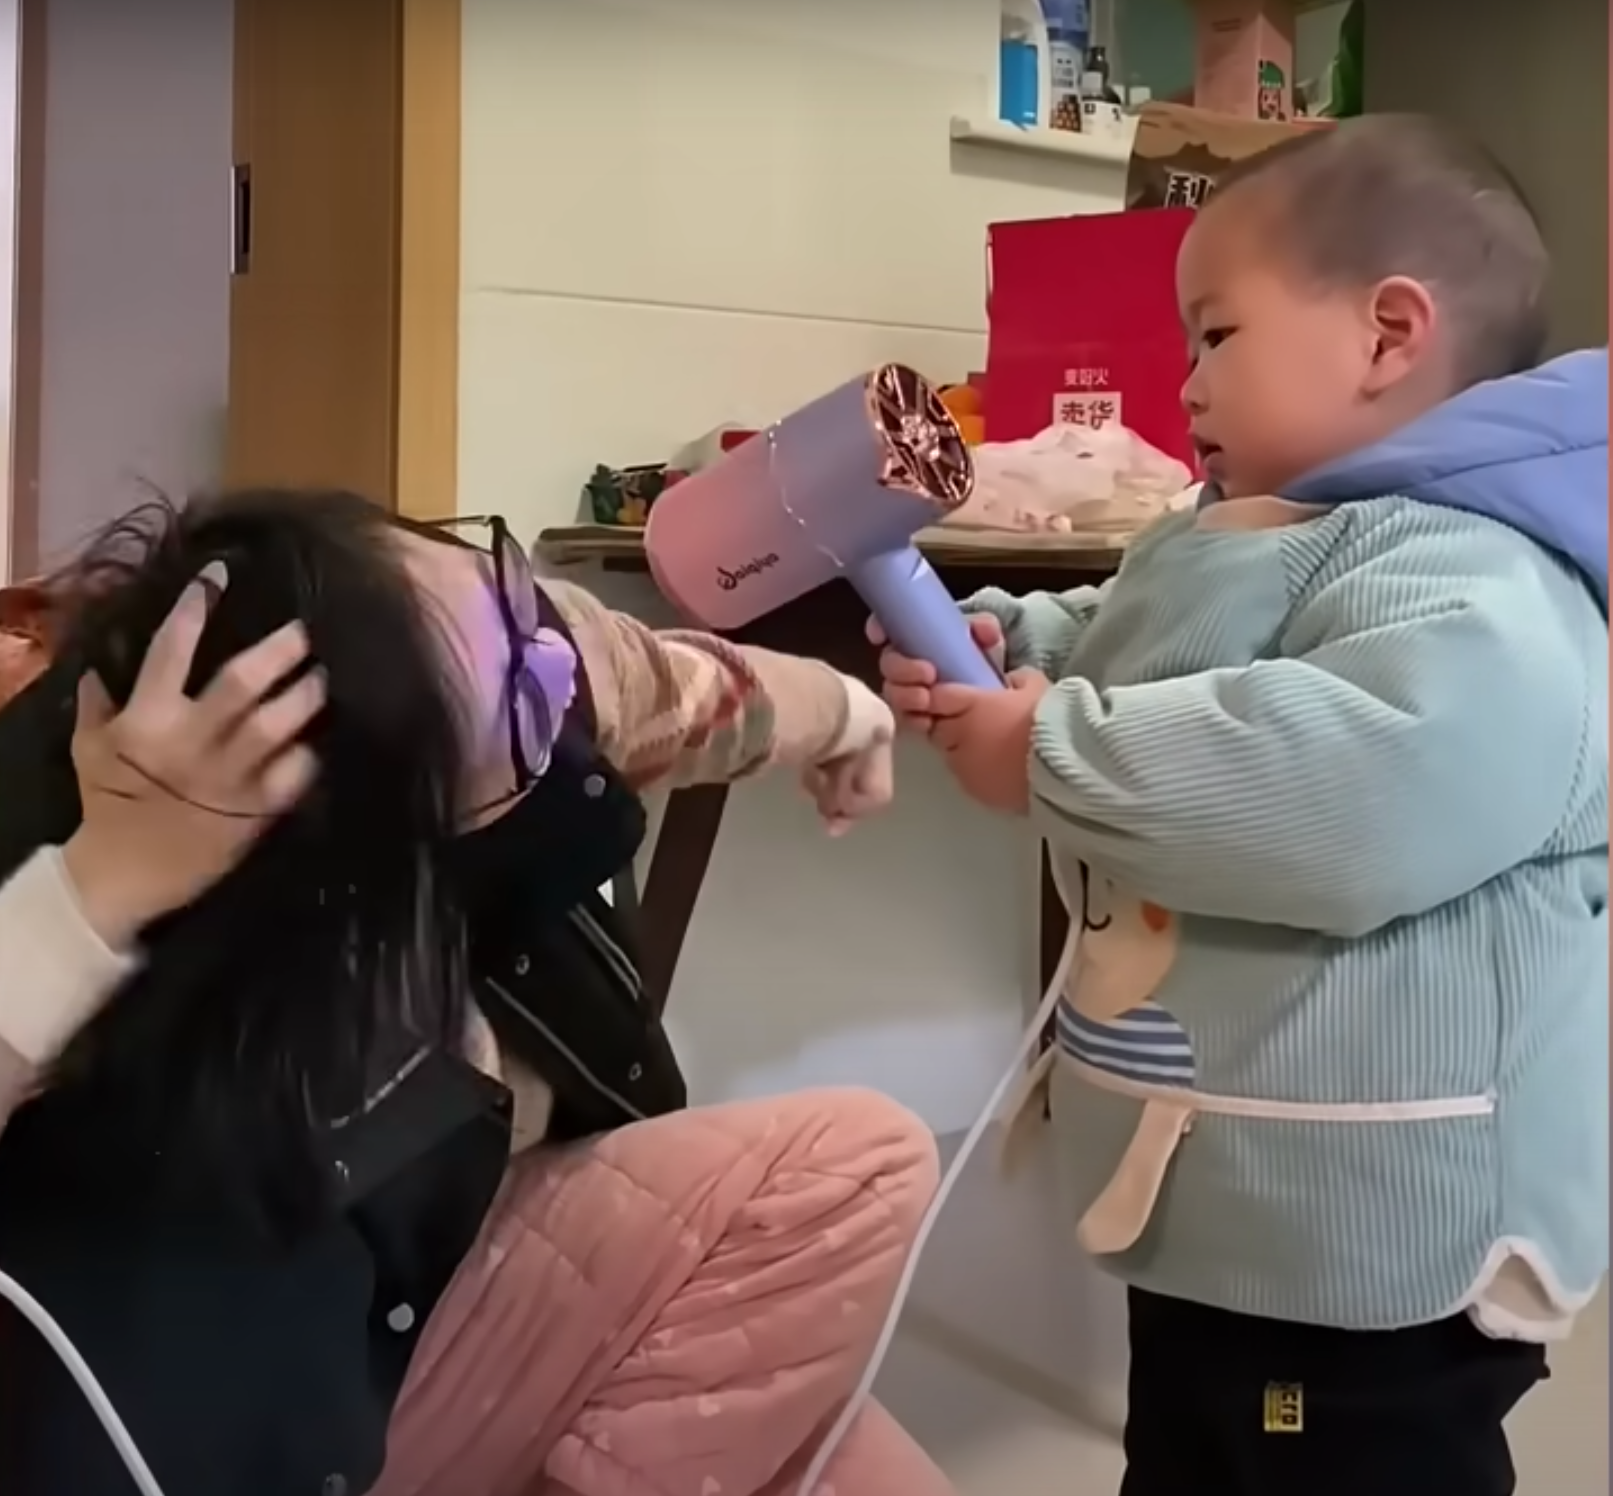 Pomelo aide sa mère à tenir son sèche-cheveux. | Source : Youtube.com/South China Morning Post